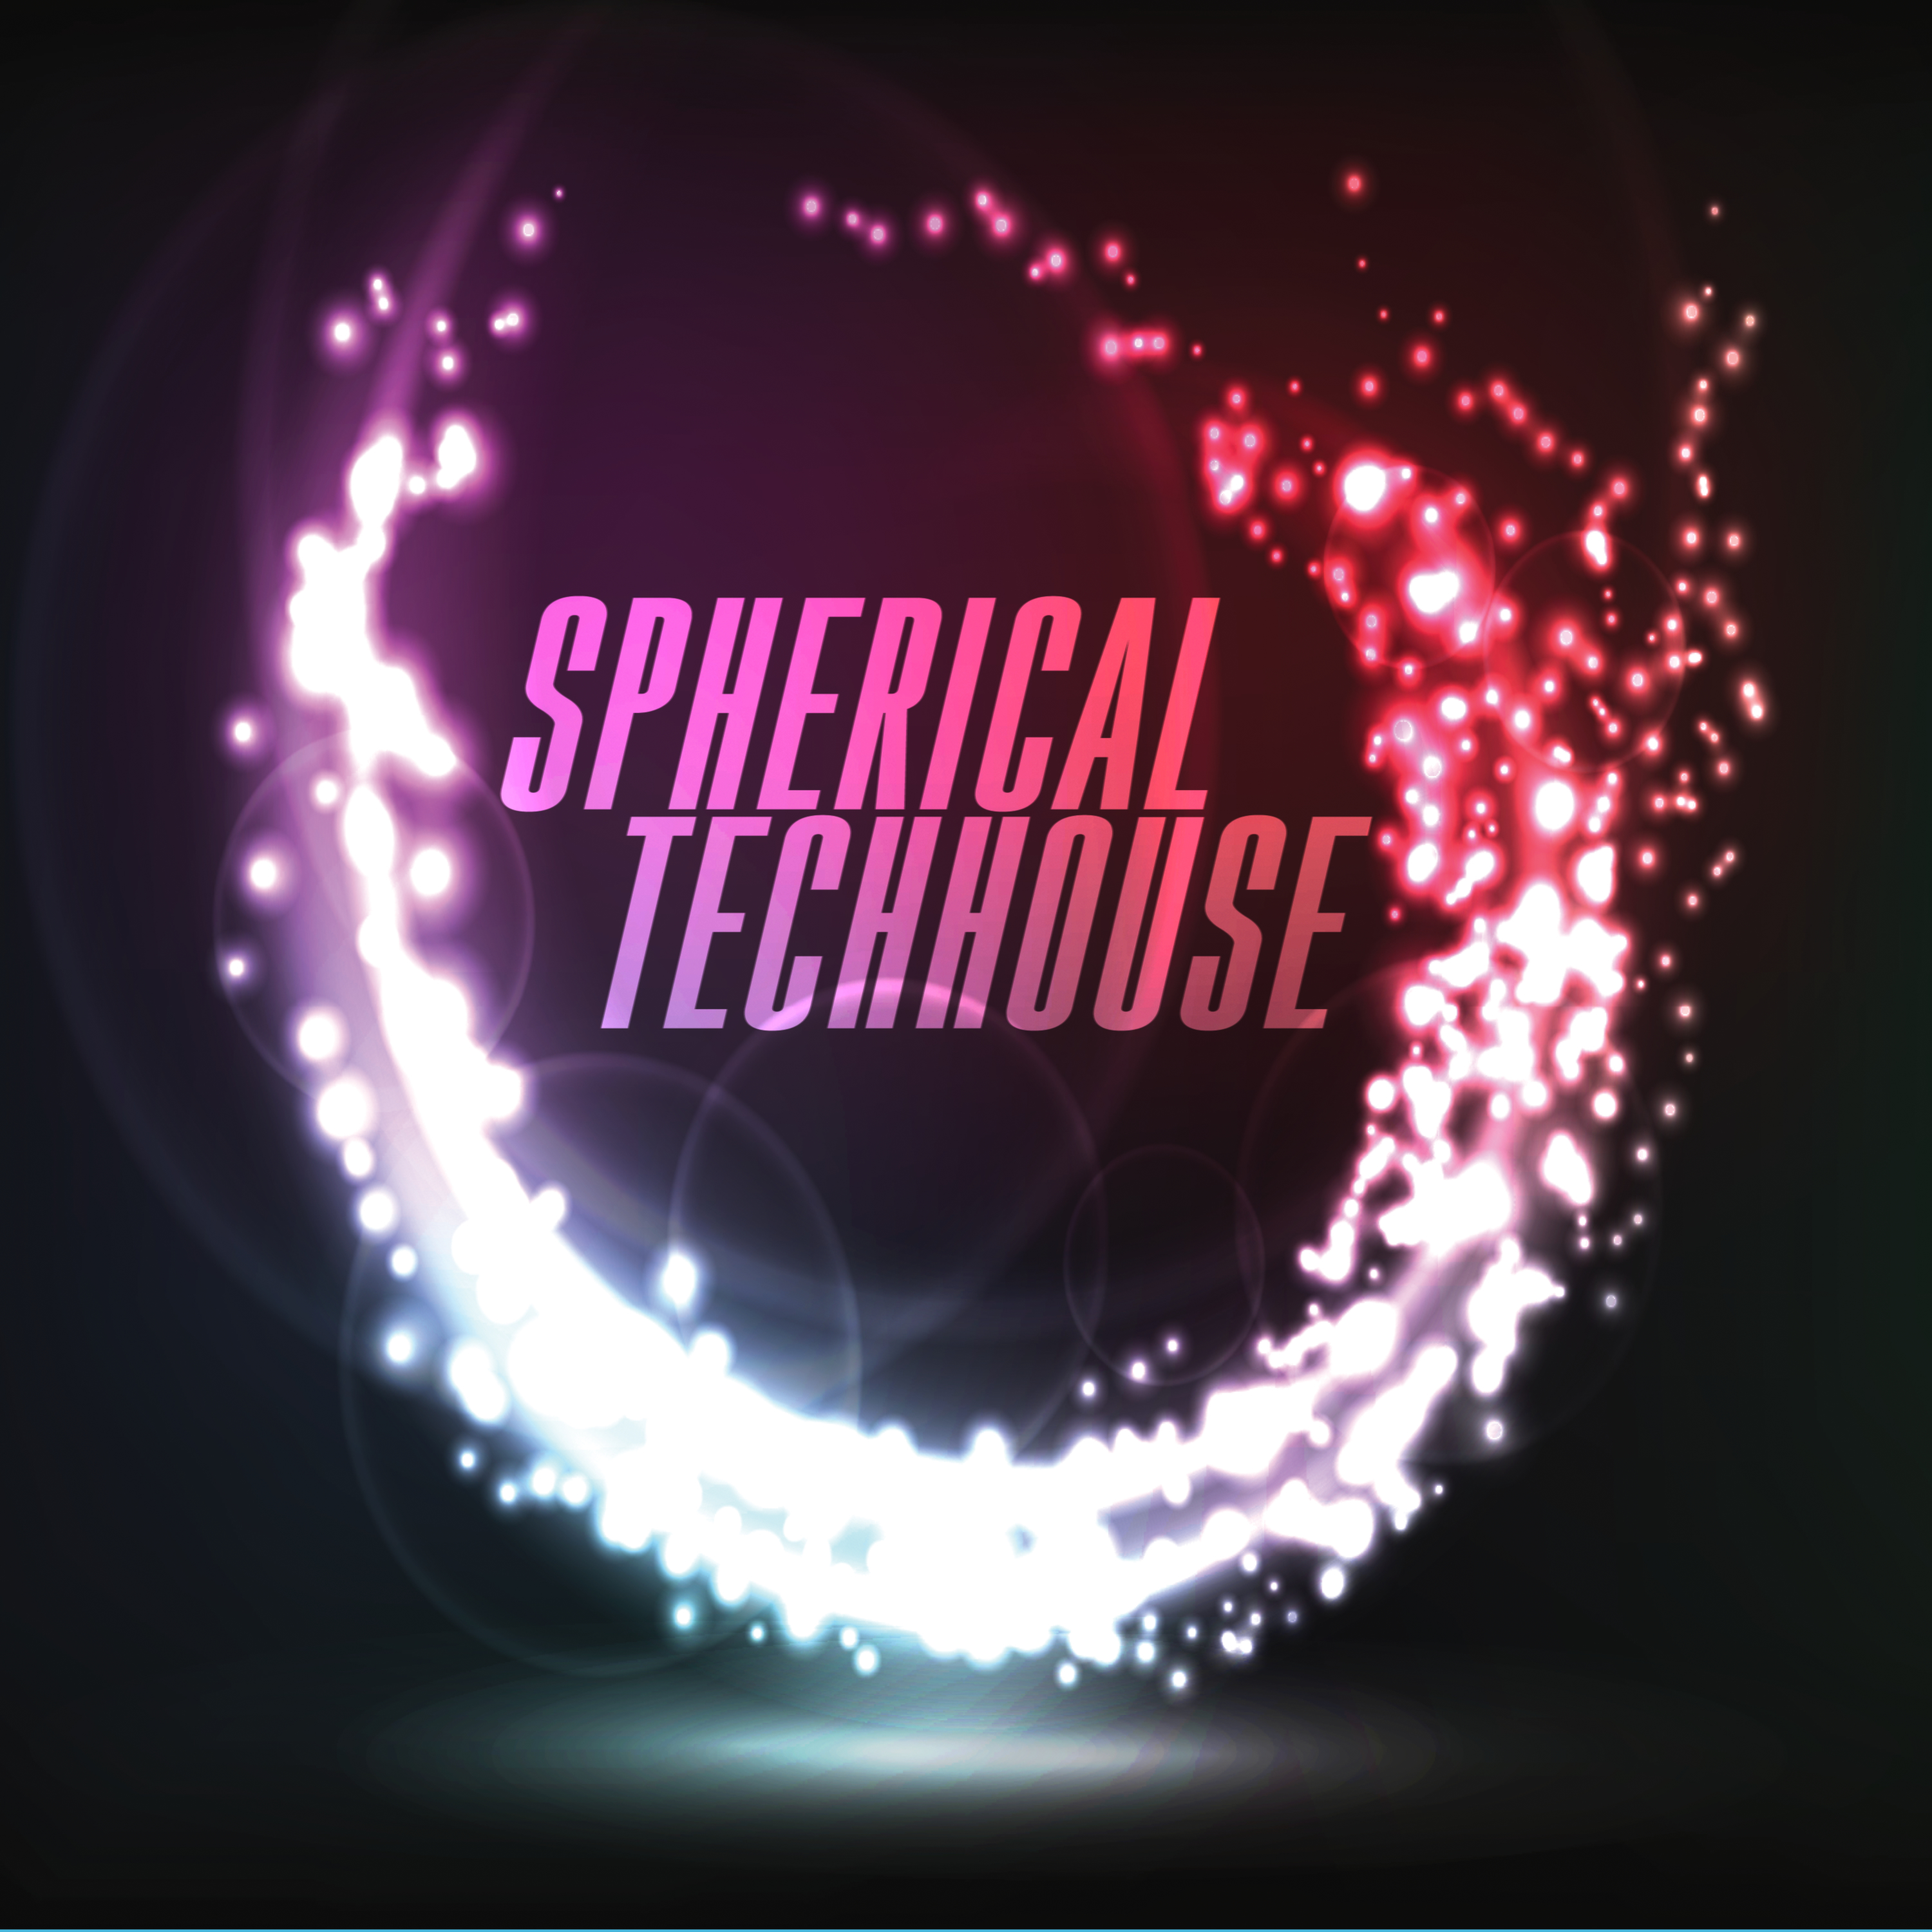 Spherical Techhouse